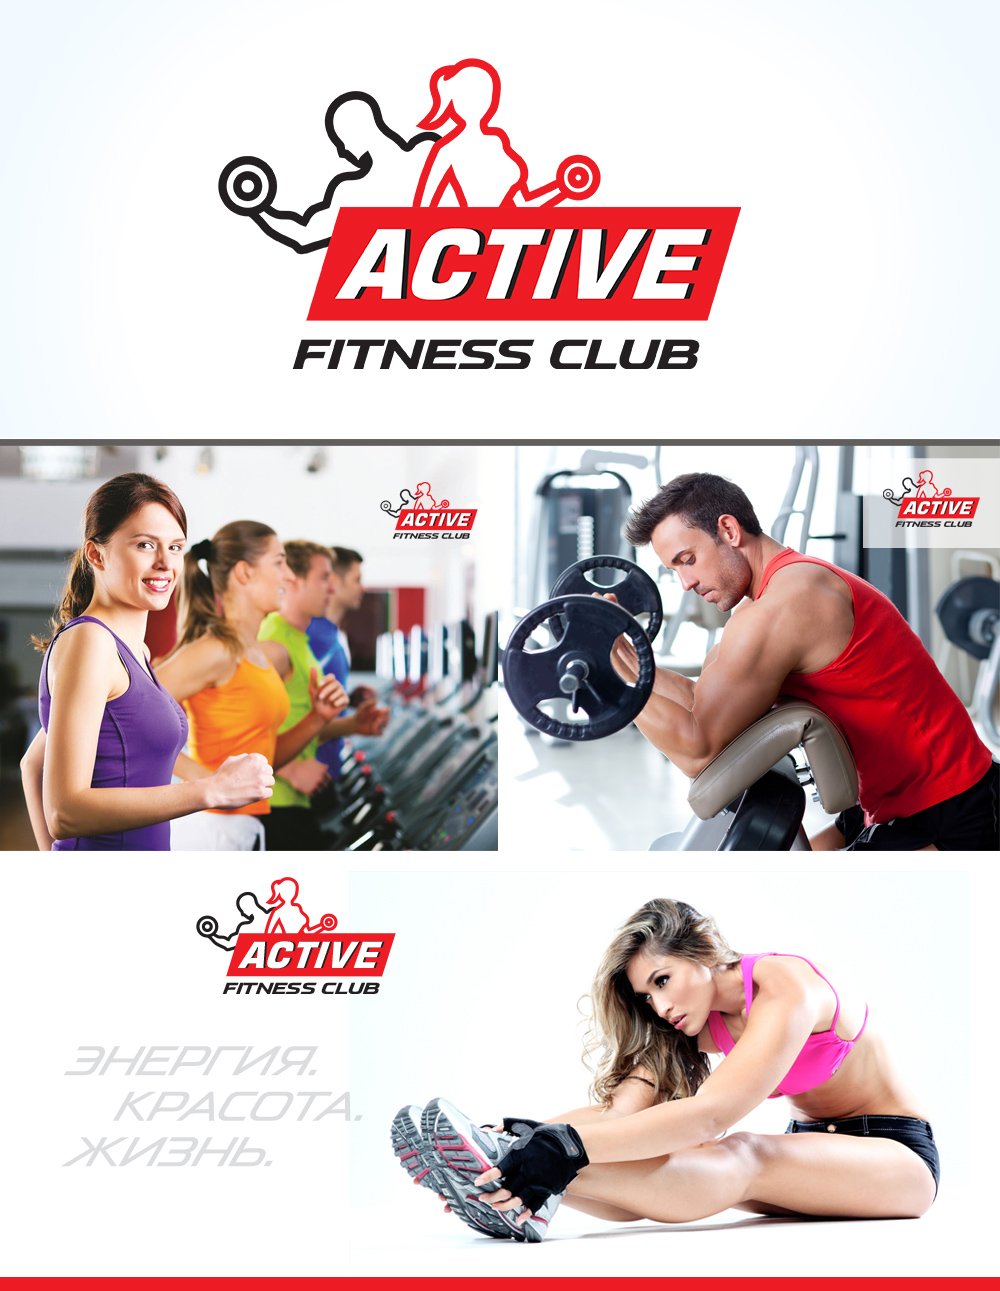 Active fitness club